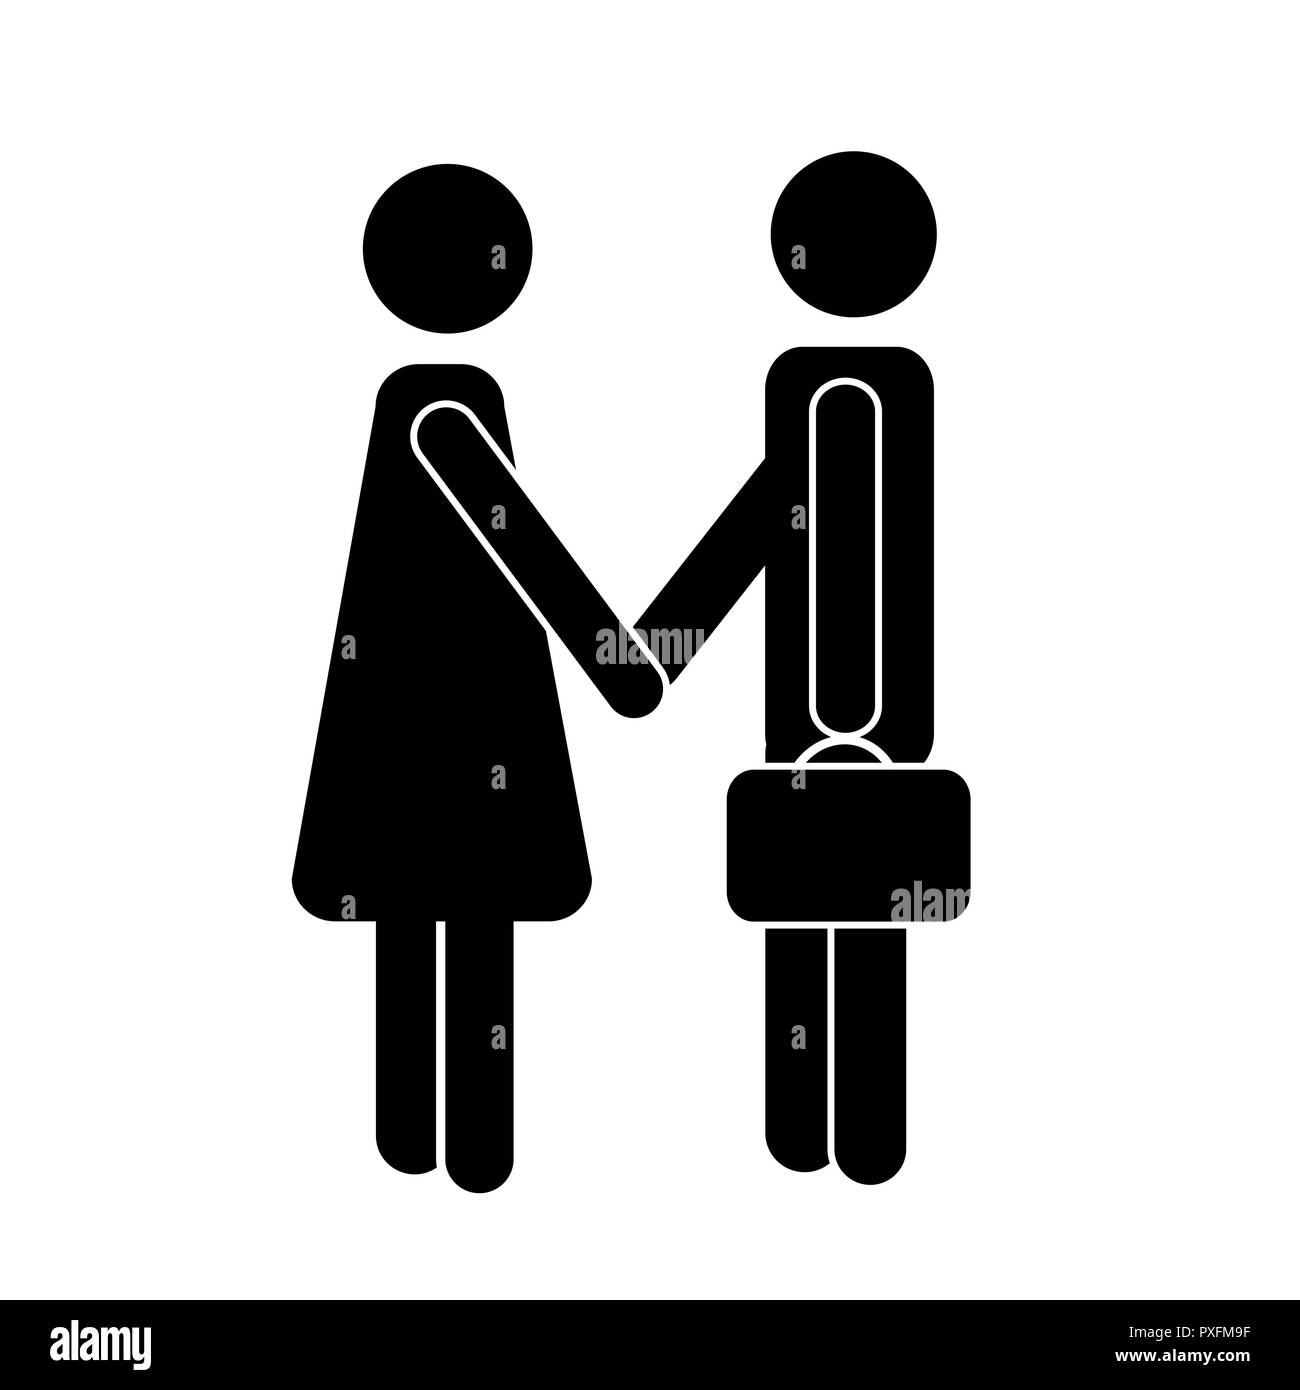 Frau und Mann schütteln Hände Piktogramm Vektor-illustration EPS 10. Stock Vektor